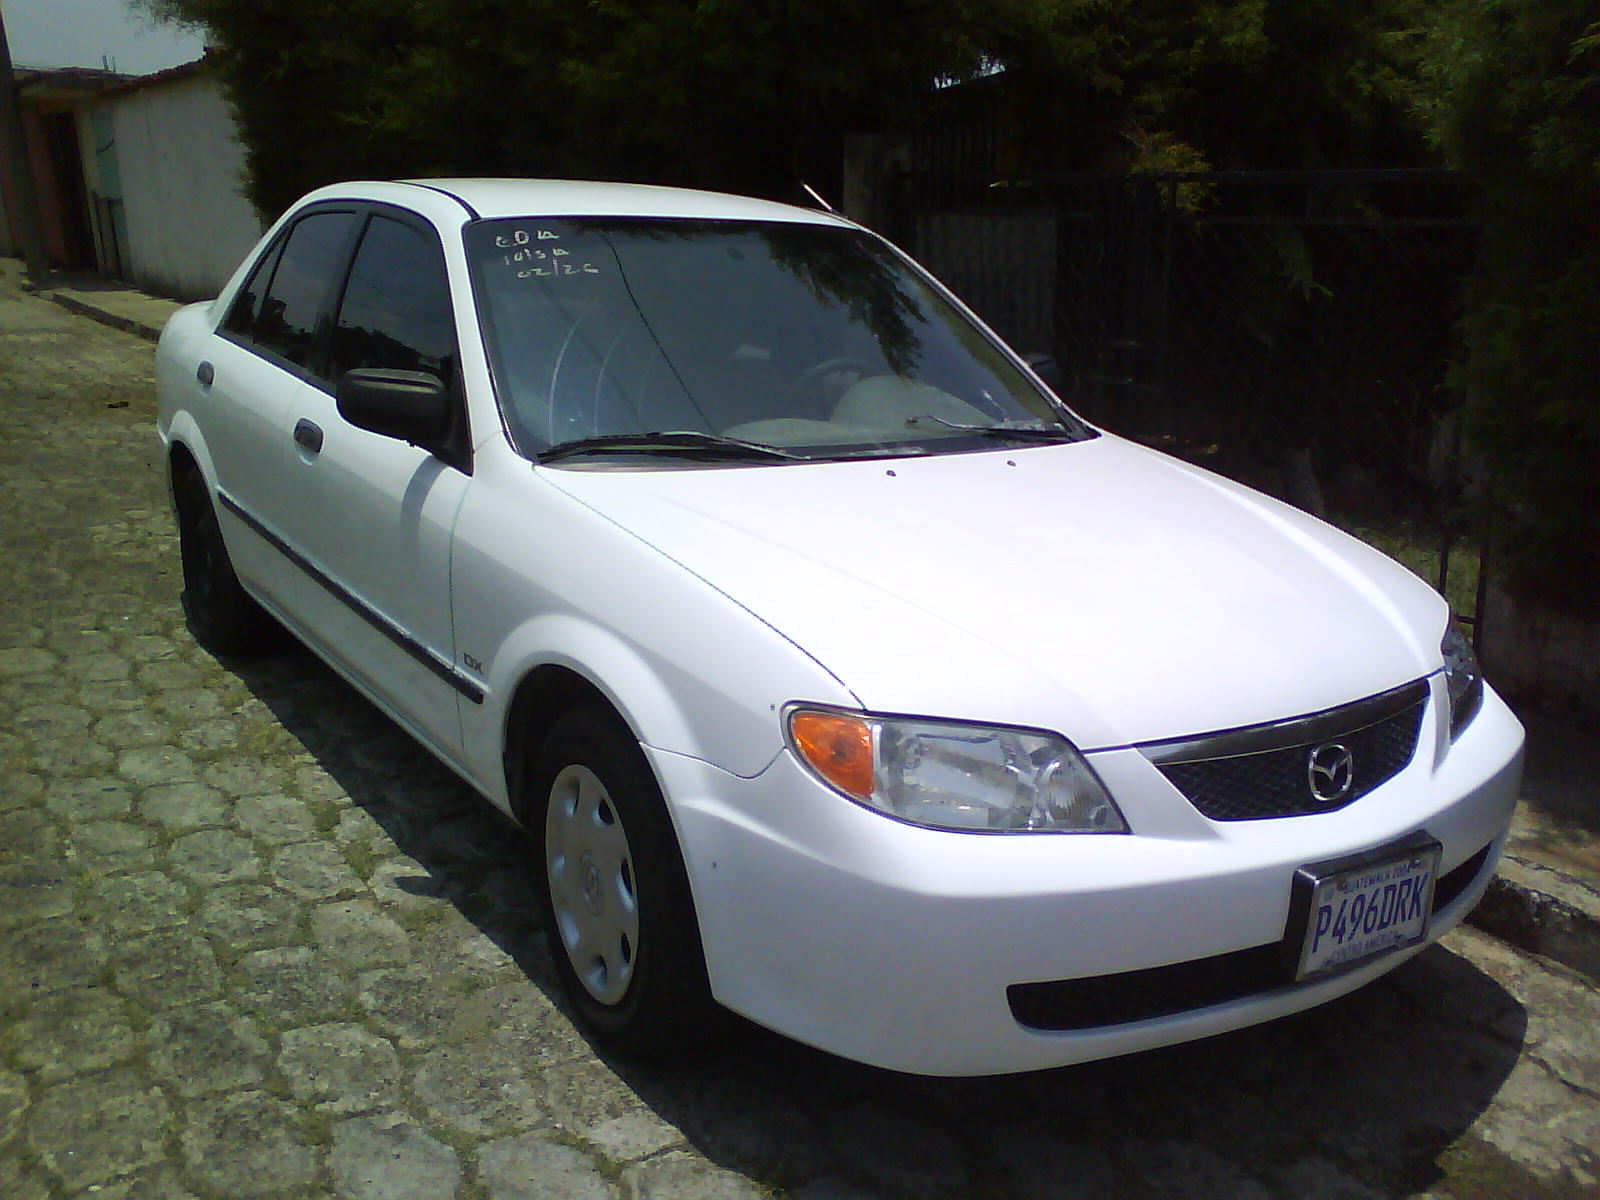 2001 Mazda Protege DX picture, exterior